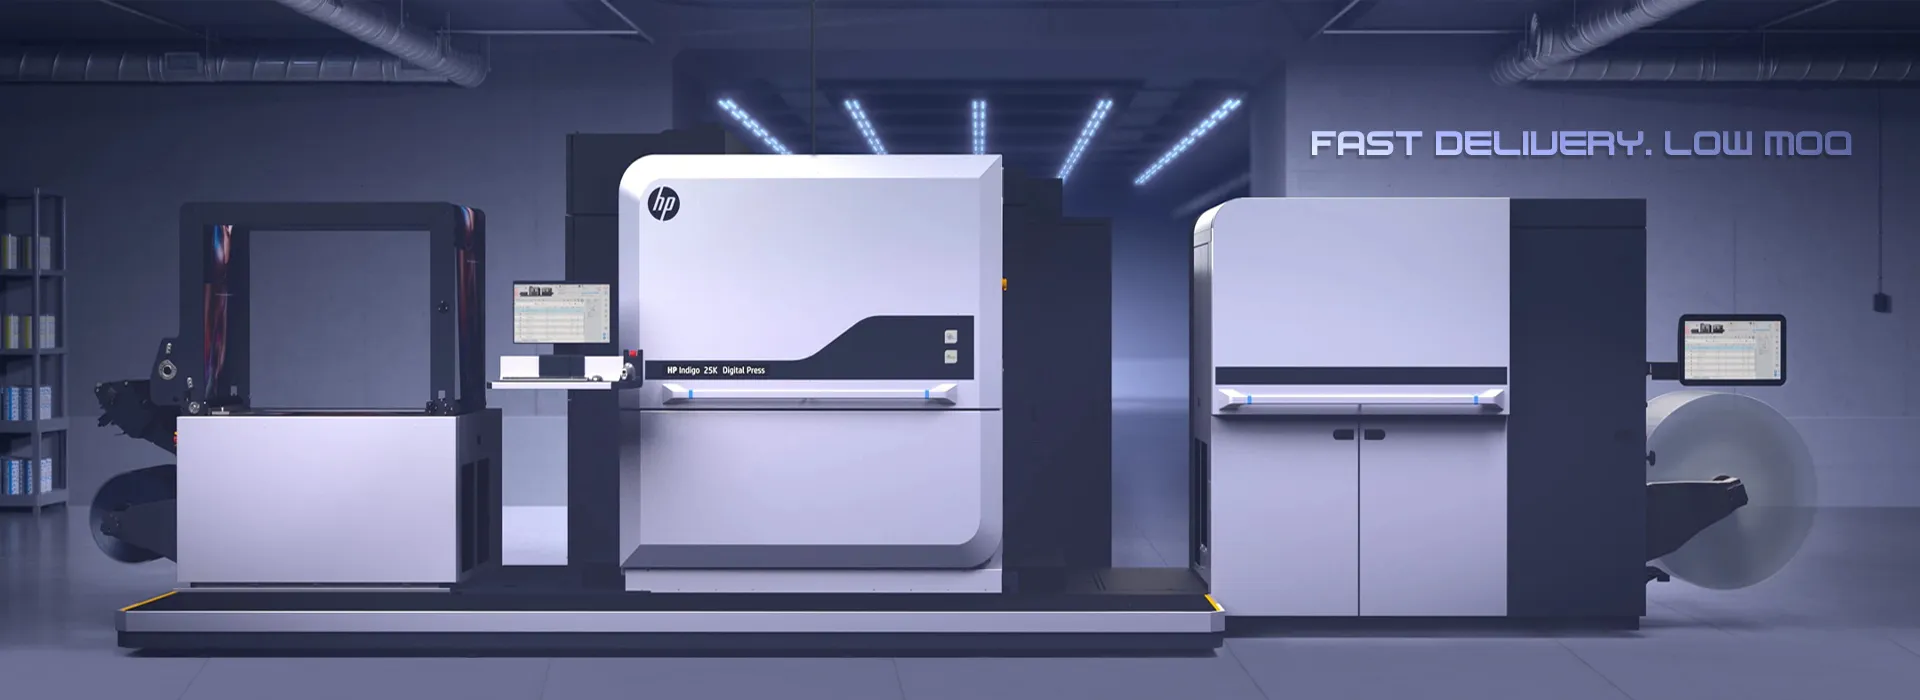 We Introduced the HP INDIGO 25K Digital Printing Machine in Early 2022